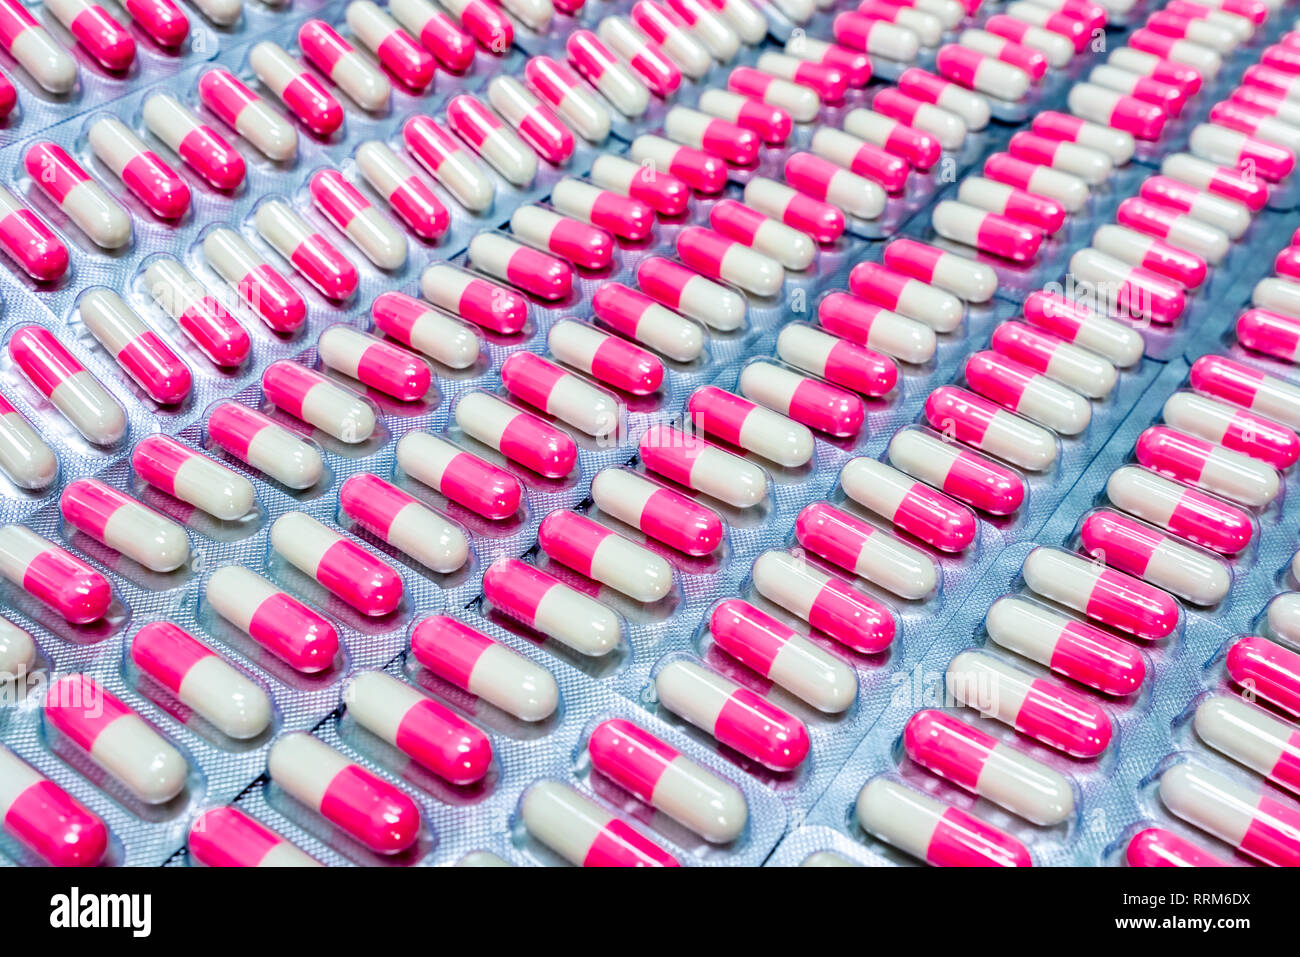 Pink-white antibiotic capsule pills in blister pack. Antibiotics drug resistance. Pharmaceutical packaging industry. Global healthcare. Pharmacy Stock Photo